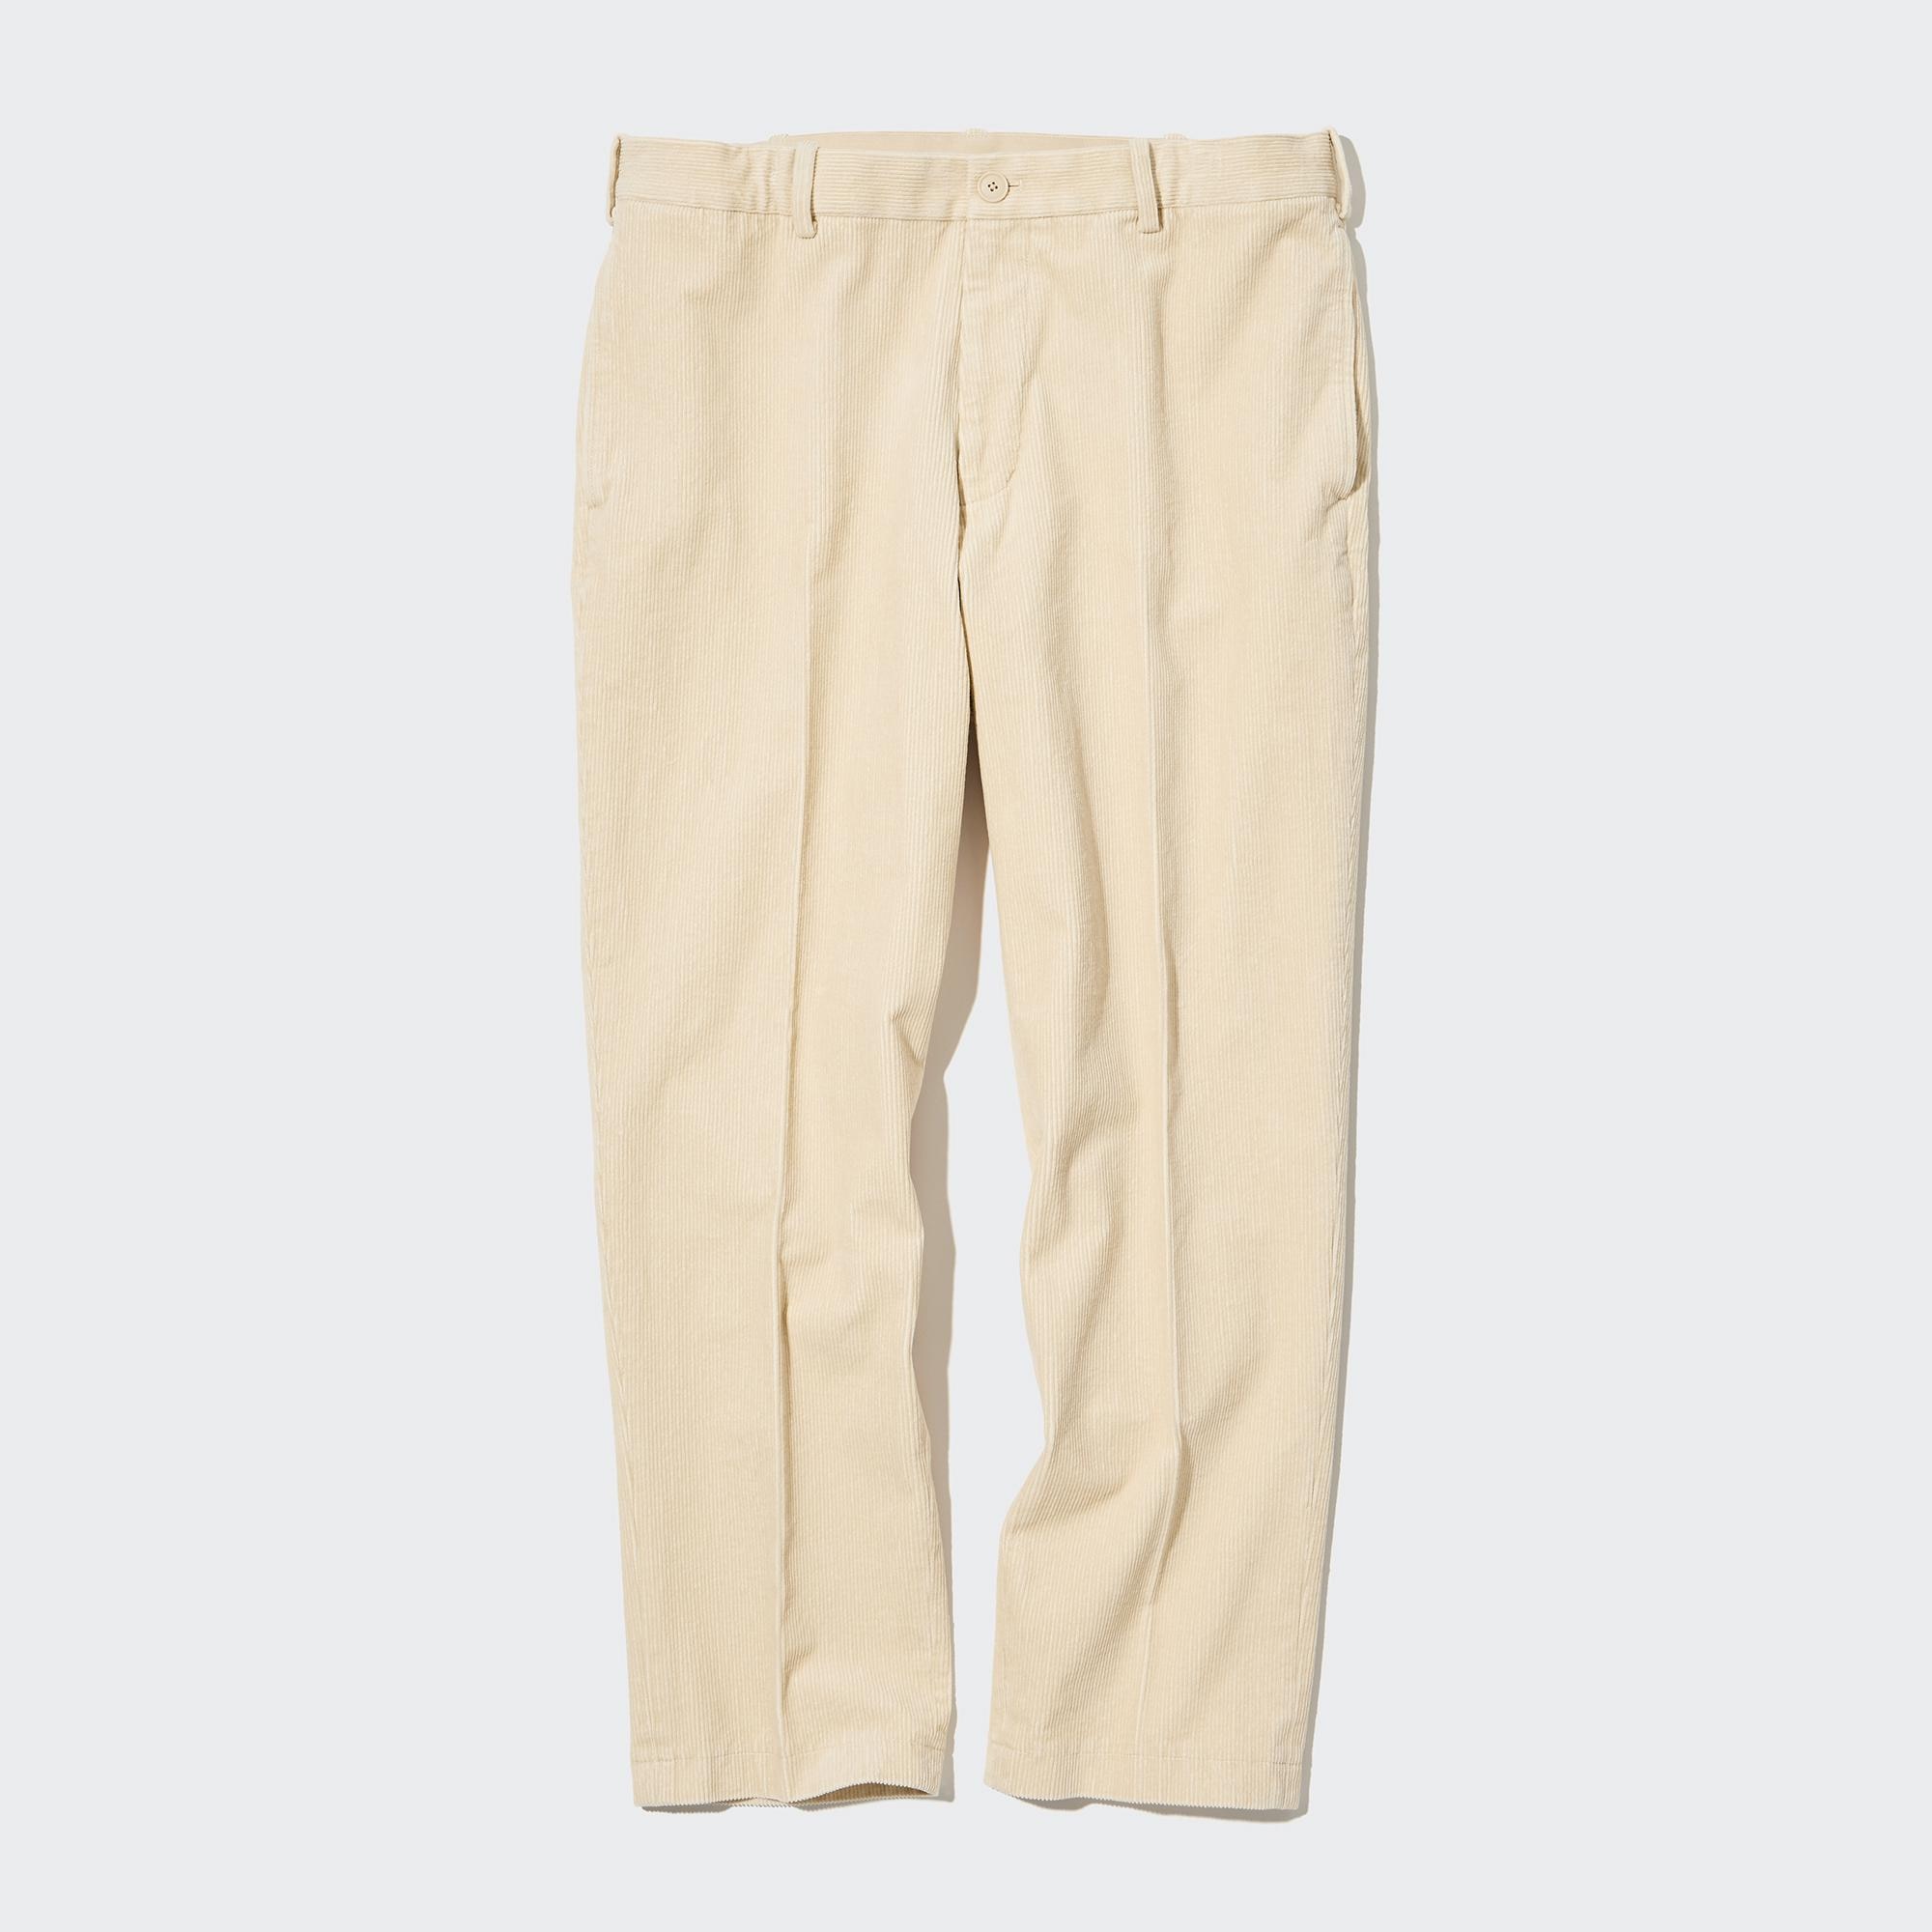 Uniqlo Men Linen Blend Pants Size Large Orange Elastic waist 32 x 26 | eBay